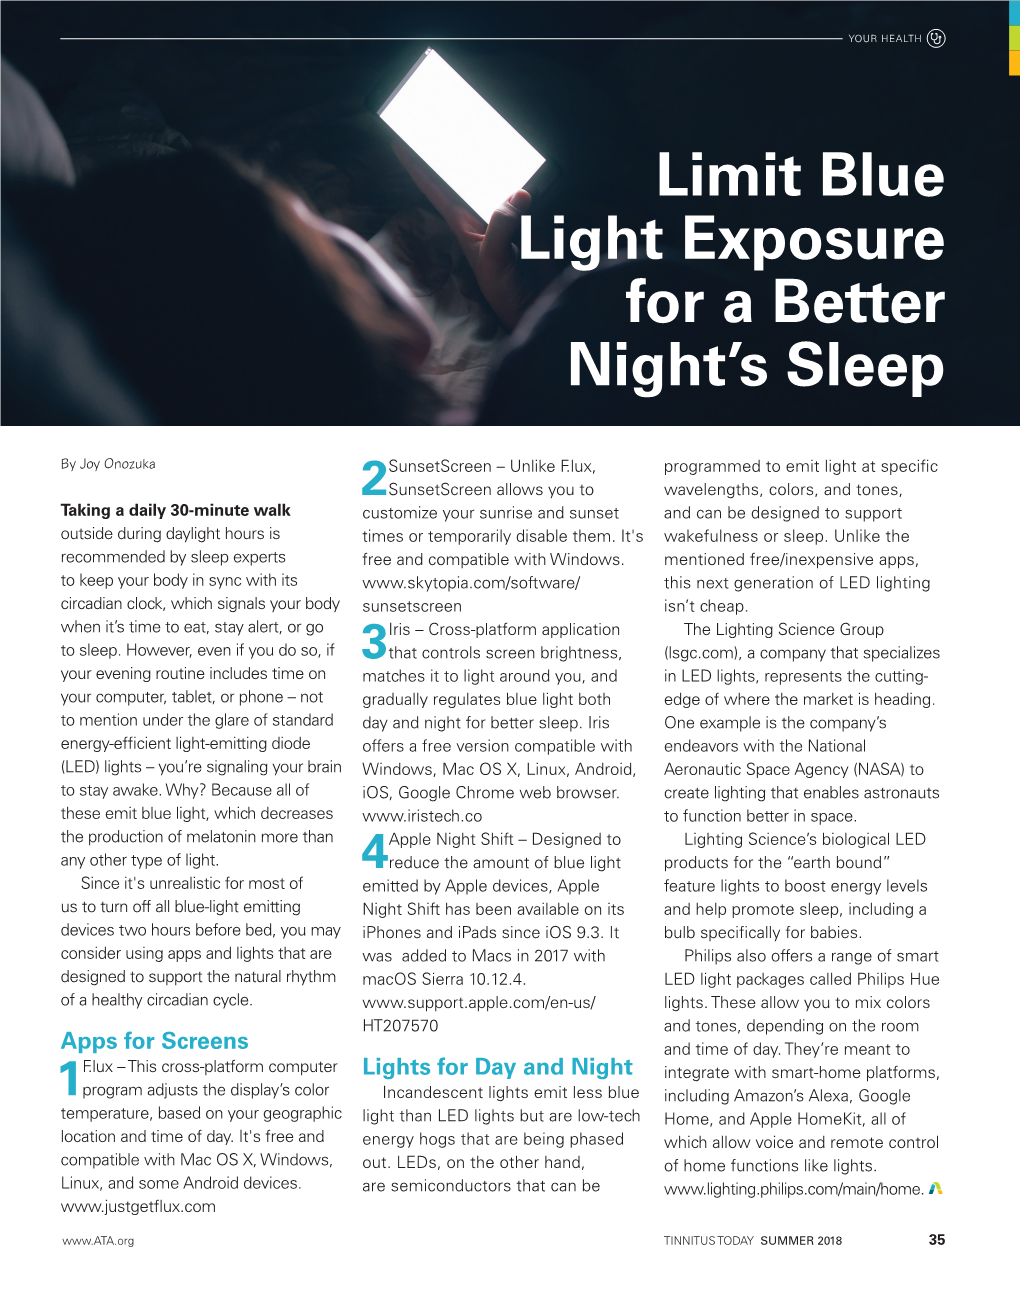 Limit Blue Light Exposure for a Better Night's Sleep